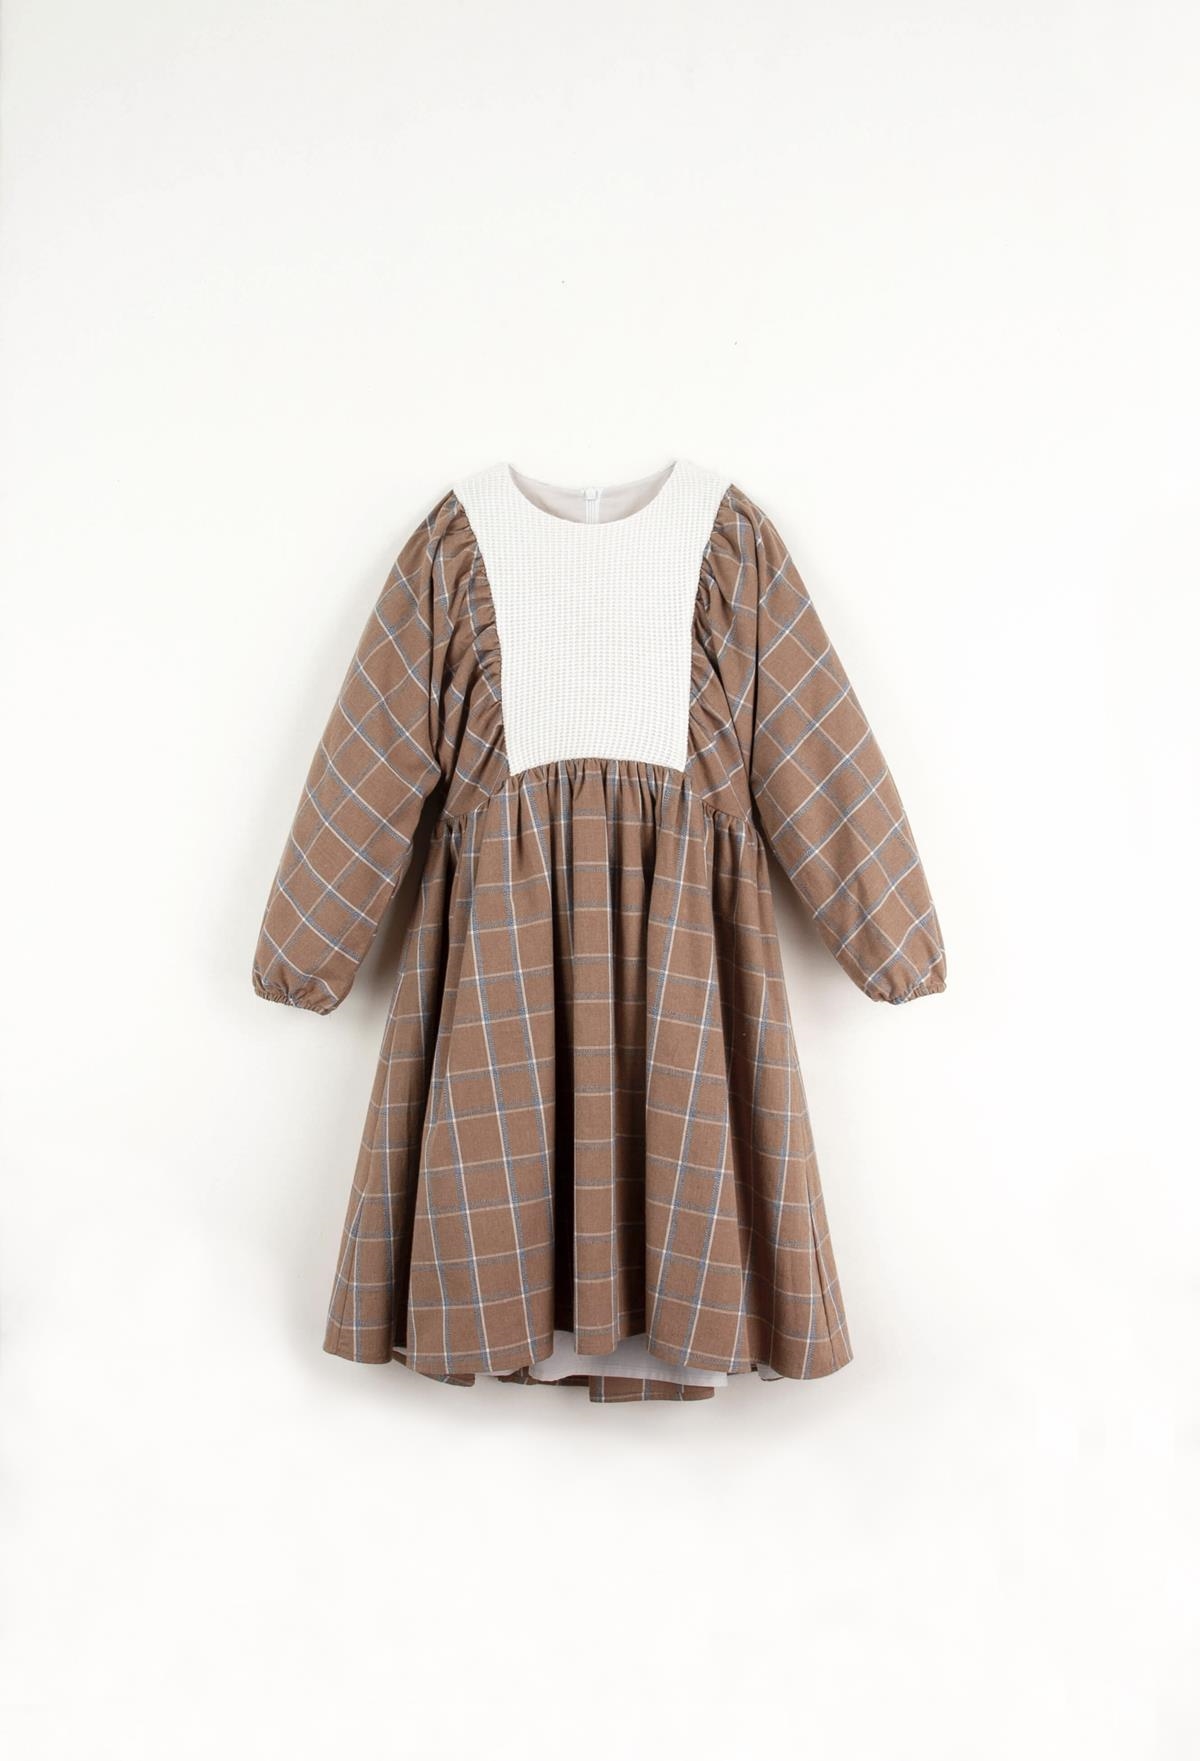 Mod.30.4 Terracotta plaid dress with yoke | AW22.23 Mod.30.4 Terracotta plaid dress with yoke